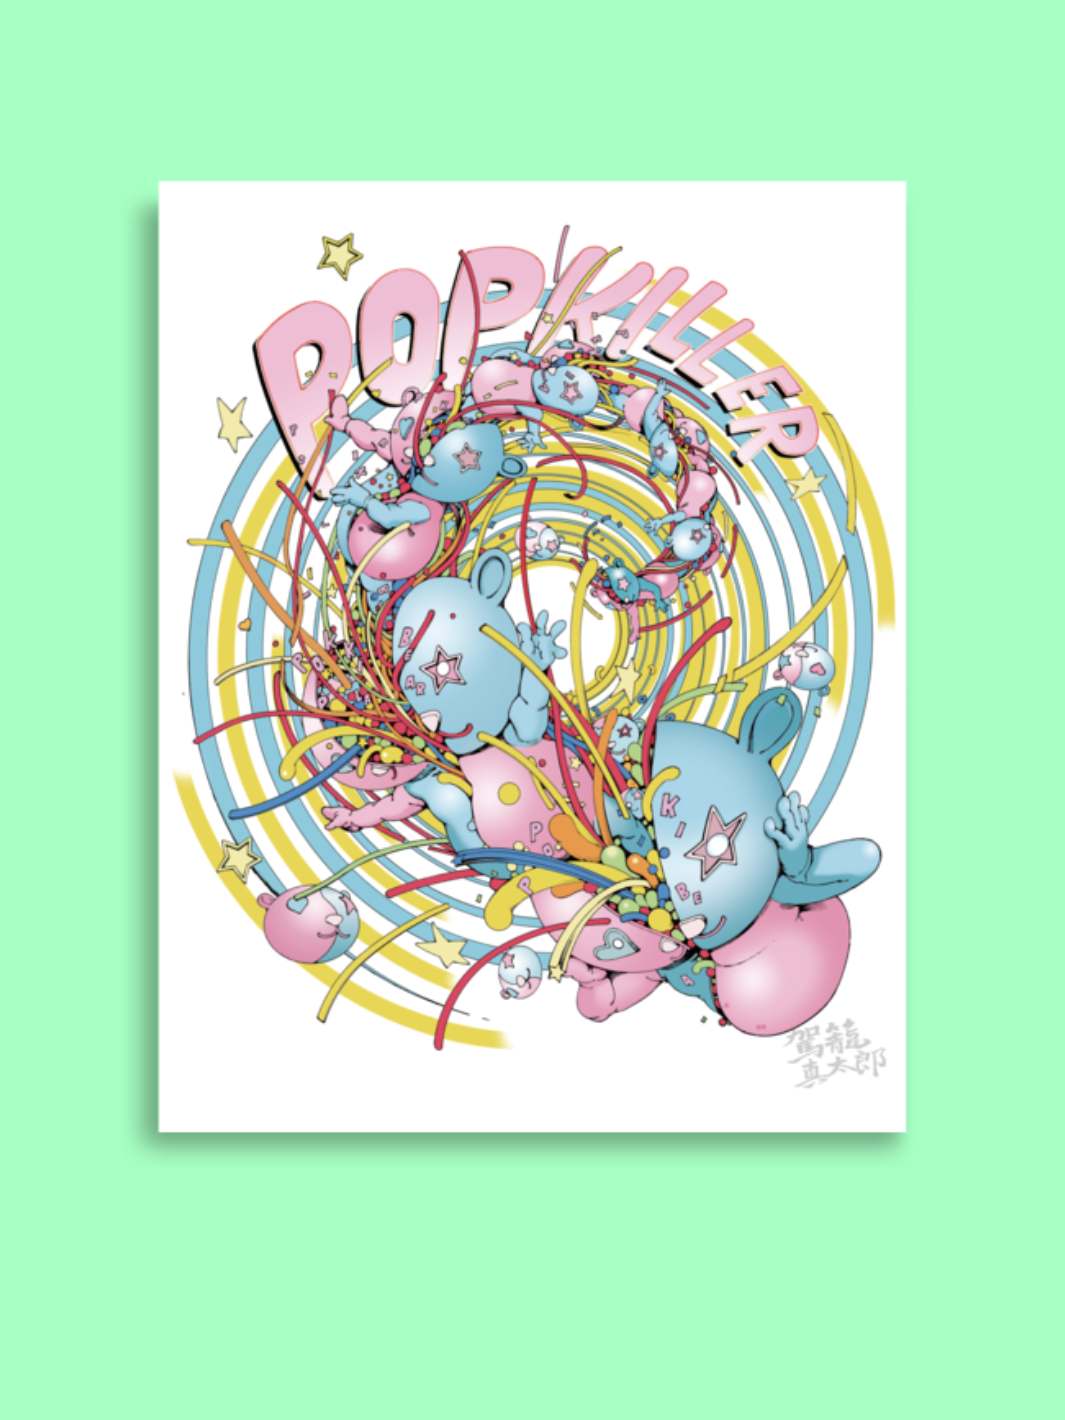 Popkiller Artist Series Shintaro Kago Pokkila Party Portal Poster